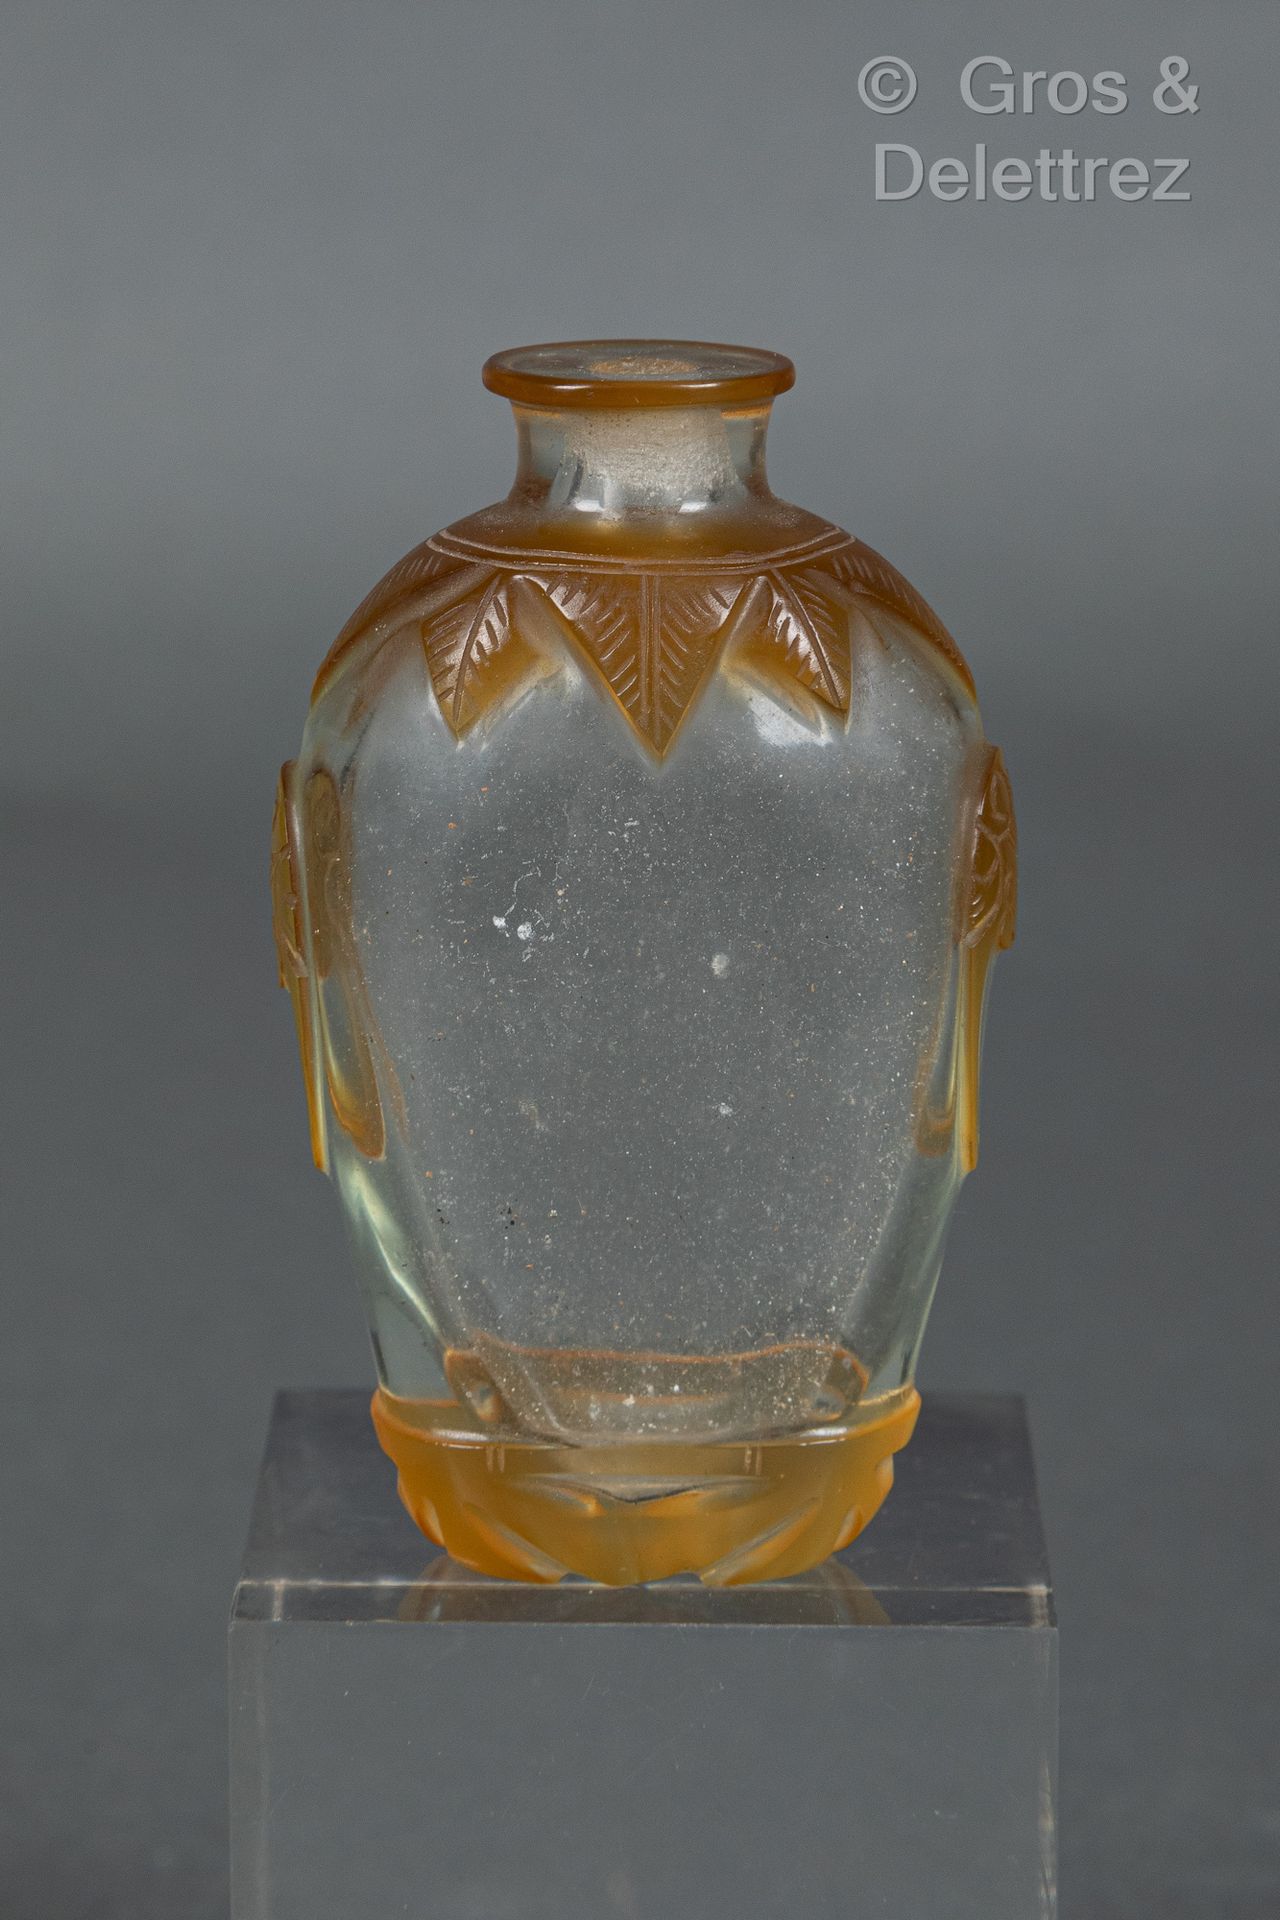 Null 中国，19世纪末
一件半透明和橙色套料的玻璃鼻烟壶，装饰有叶子和面具形成的把手。